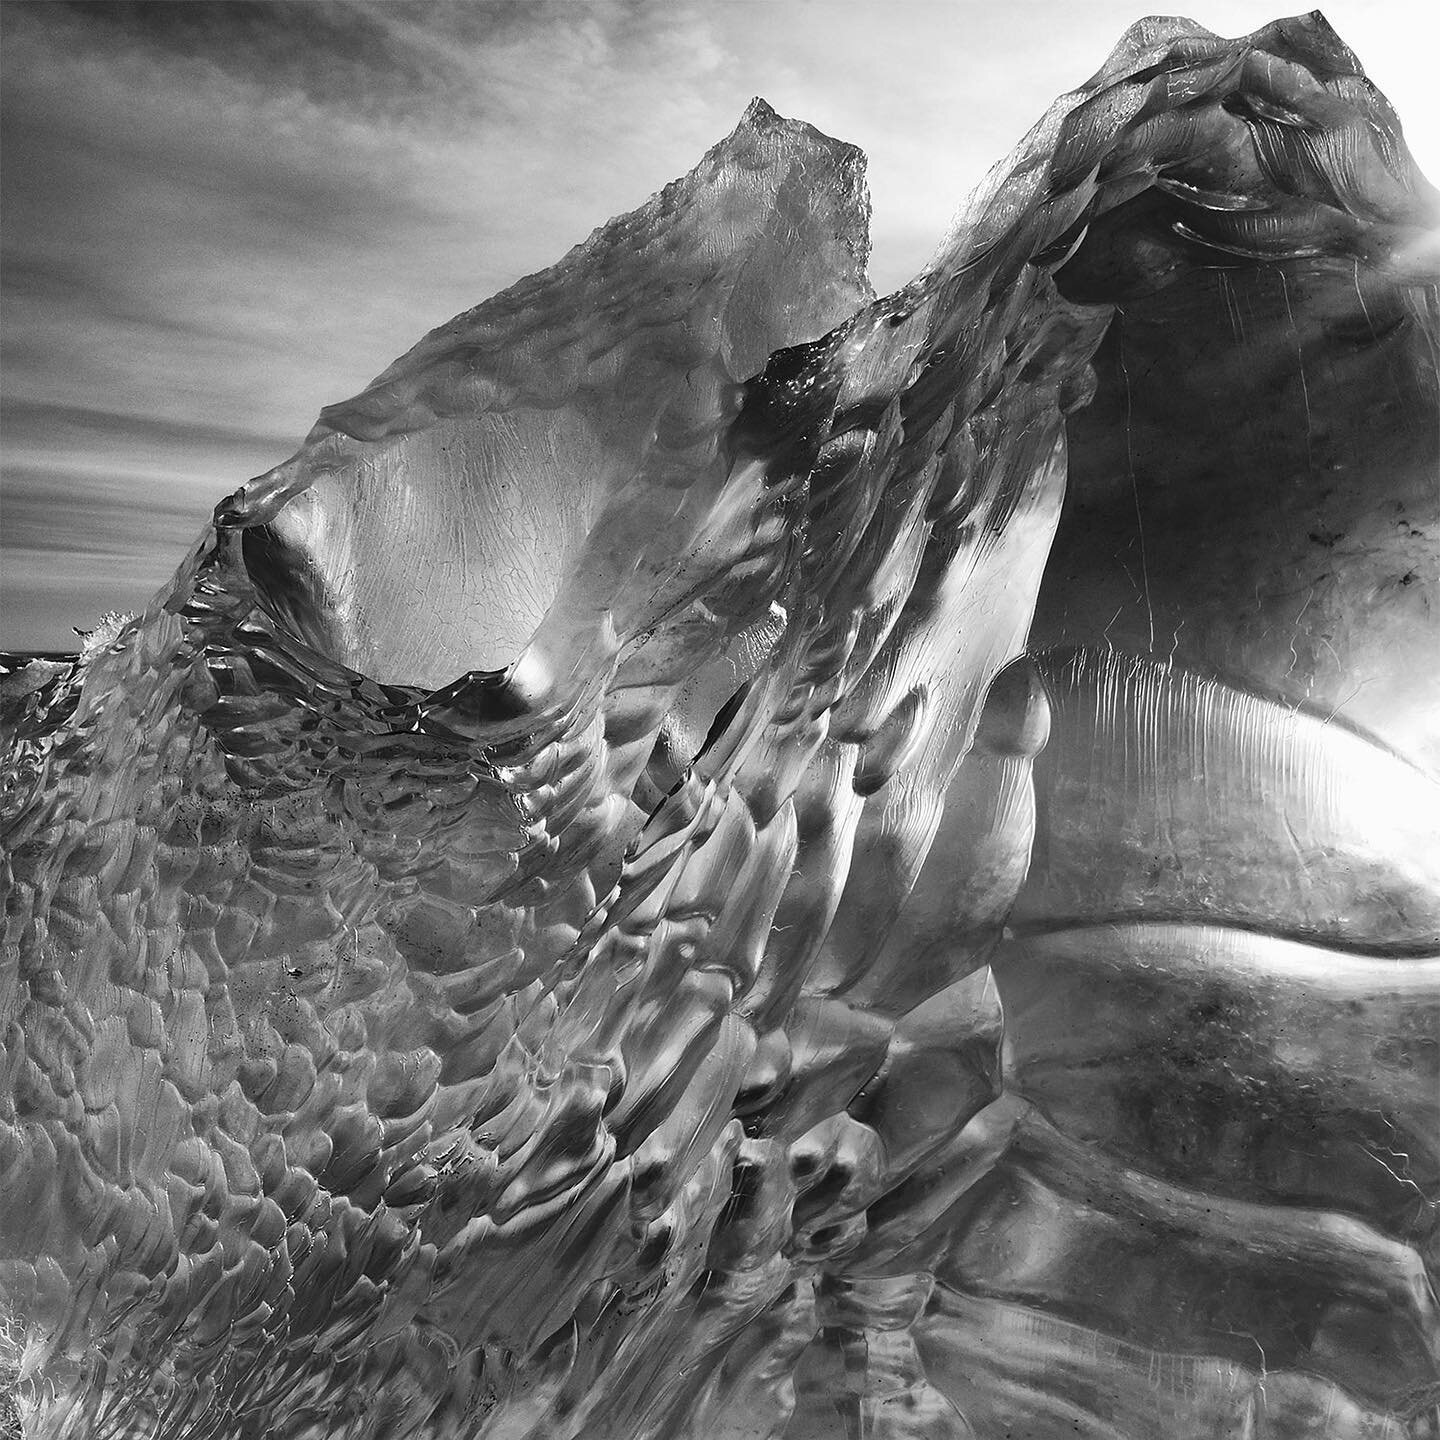 Glacier Melt⁠⁠
⁠⁠
#ice #meltingice #circle_of_ice #black_beach #glisteningice #frozen ice #icemelt #icecrystals #jokulsrlon #glacier #glaciermelt #icelagoon #iceland #monochromatic #fineartphotographer #abstractphotography #fujifilm#X-T3⁠⁠